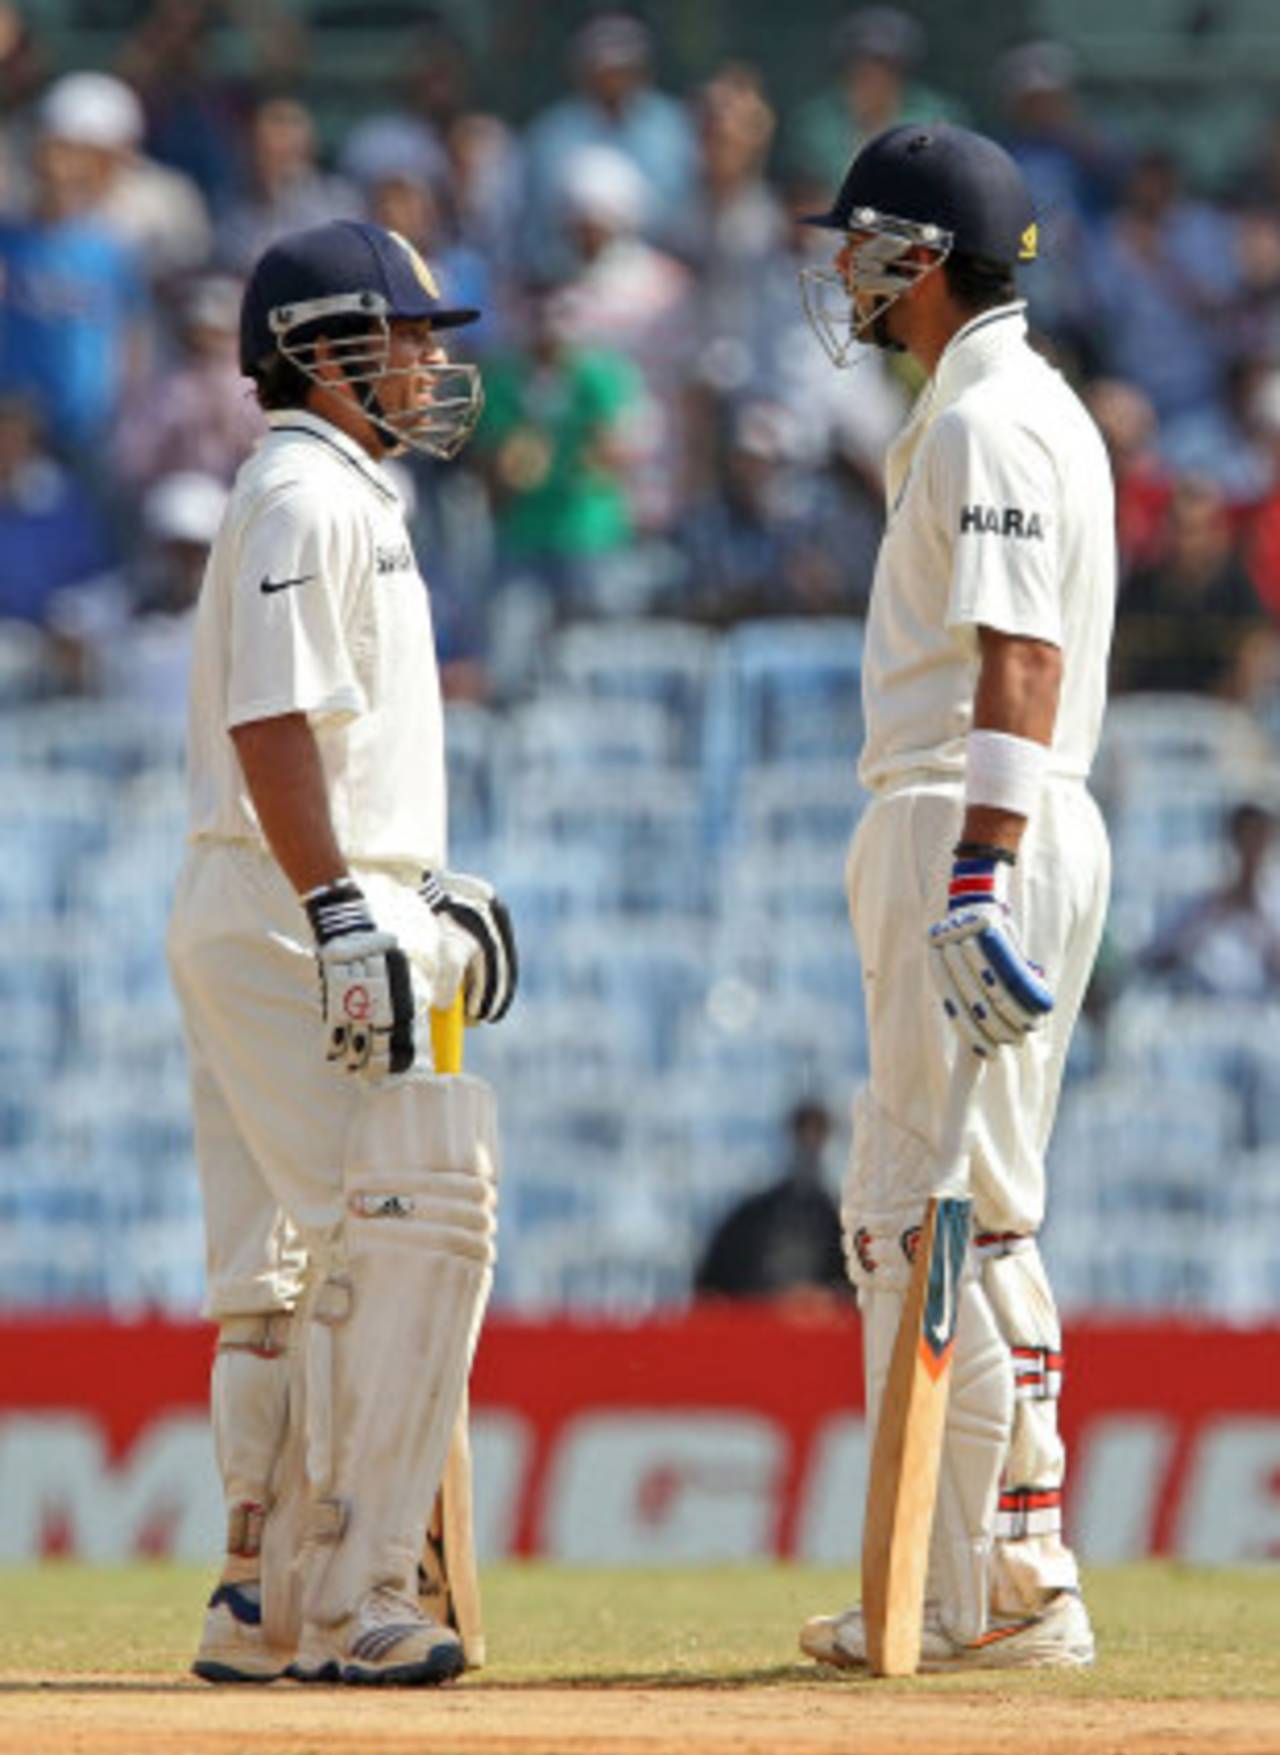 Tendulkar has groomed and inspired India's talented young batsmen, so he'll know he leaves the team in good hands&nbsp;&nbsp;&bull;&nbsp;&nbsp;BCCI